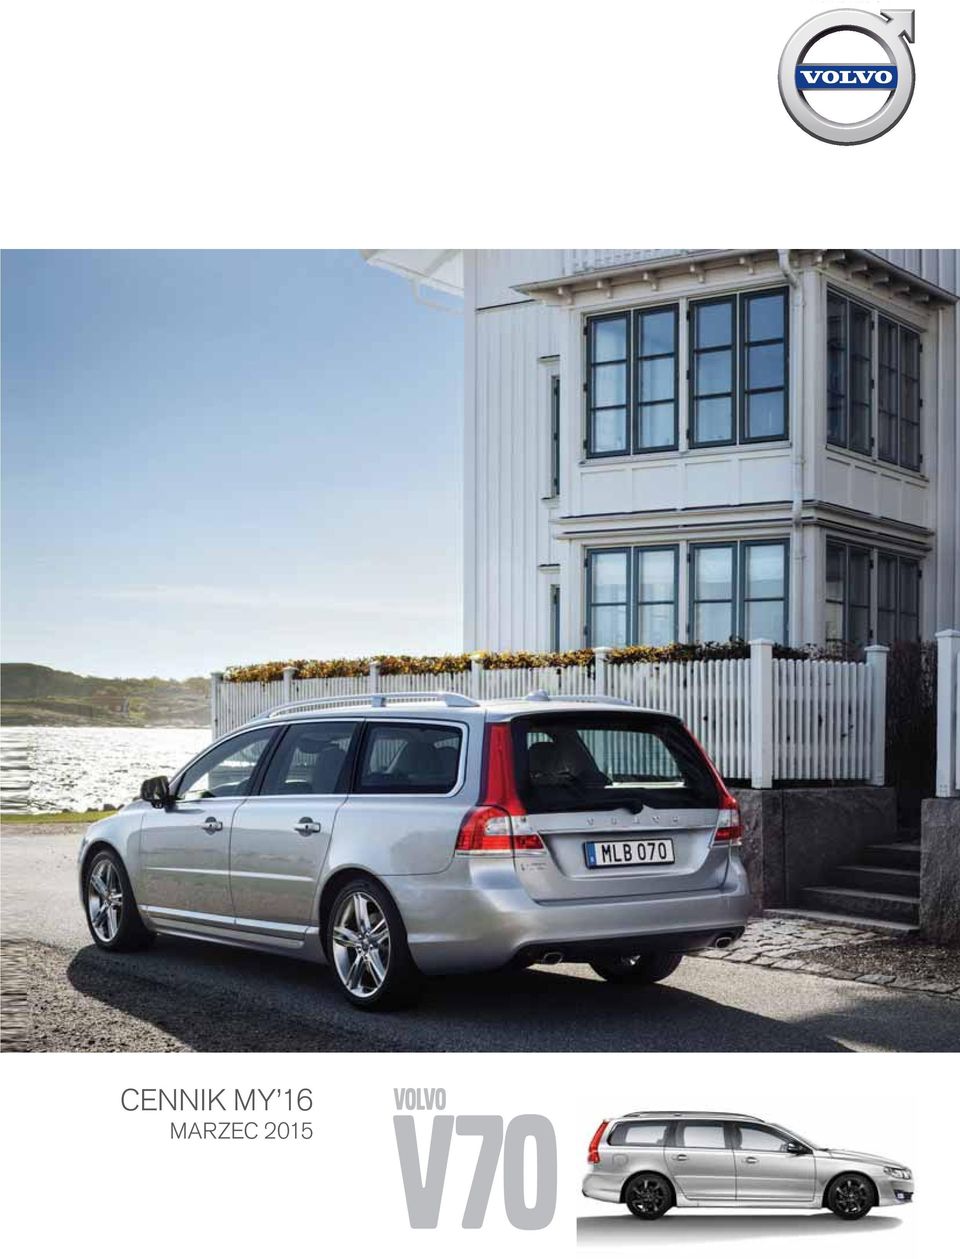 Cennik My 16 Marzec 2015 Volvo V Pdf Free Download